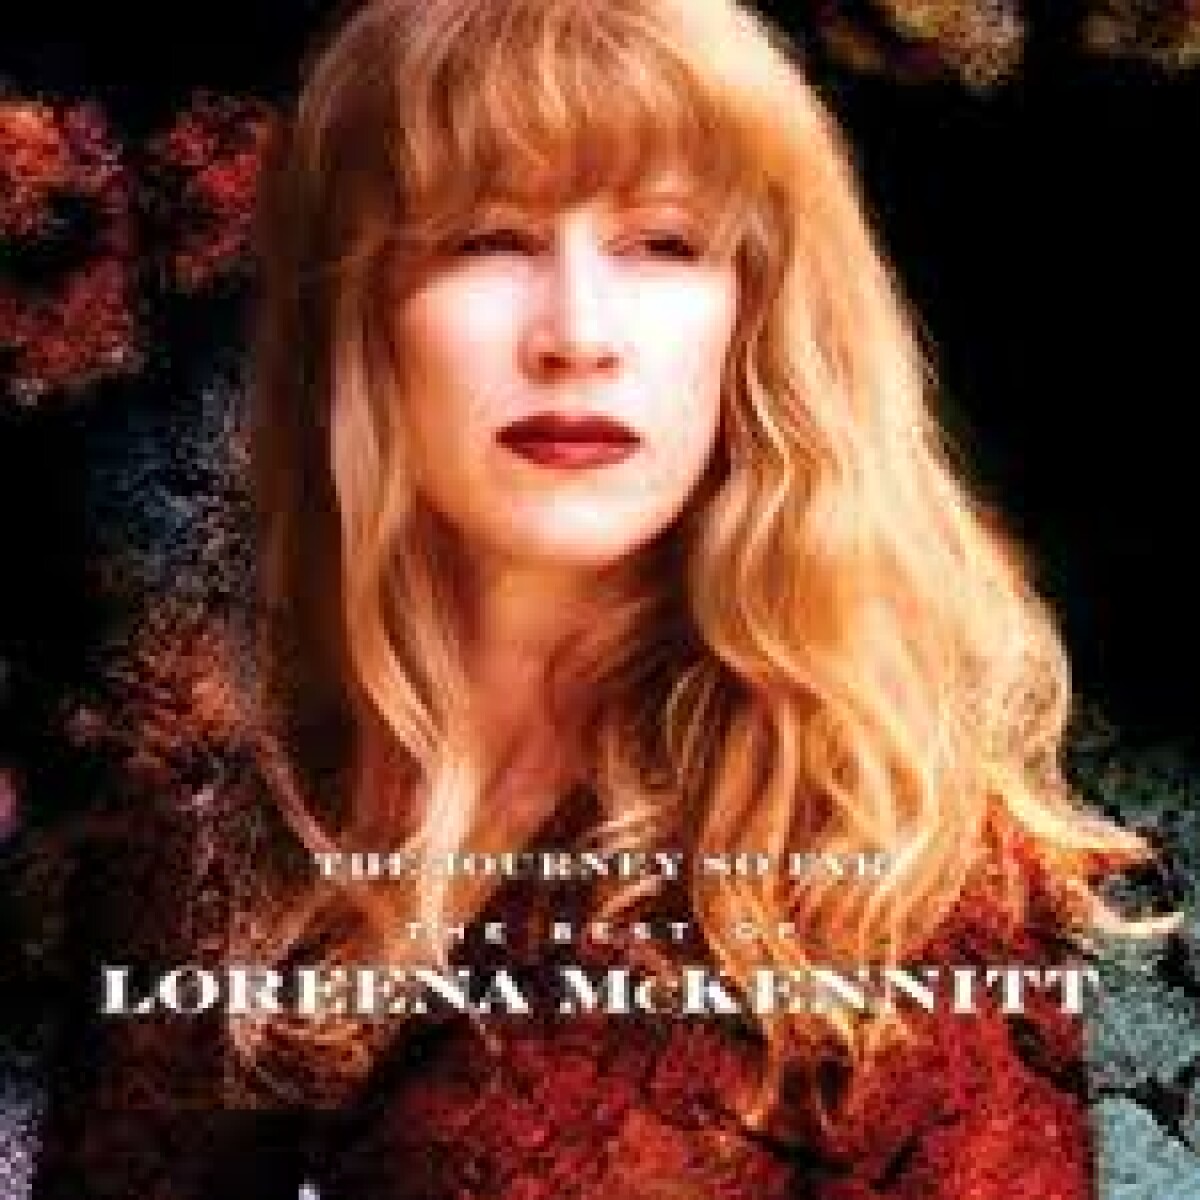 (l) Mckennitt Loreena-journey So Far The Best Of - Vinilo 